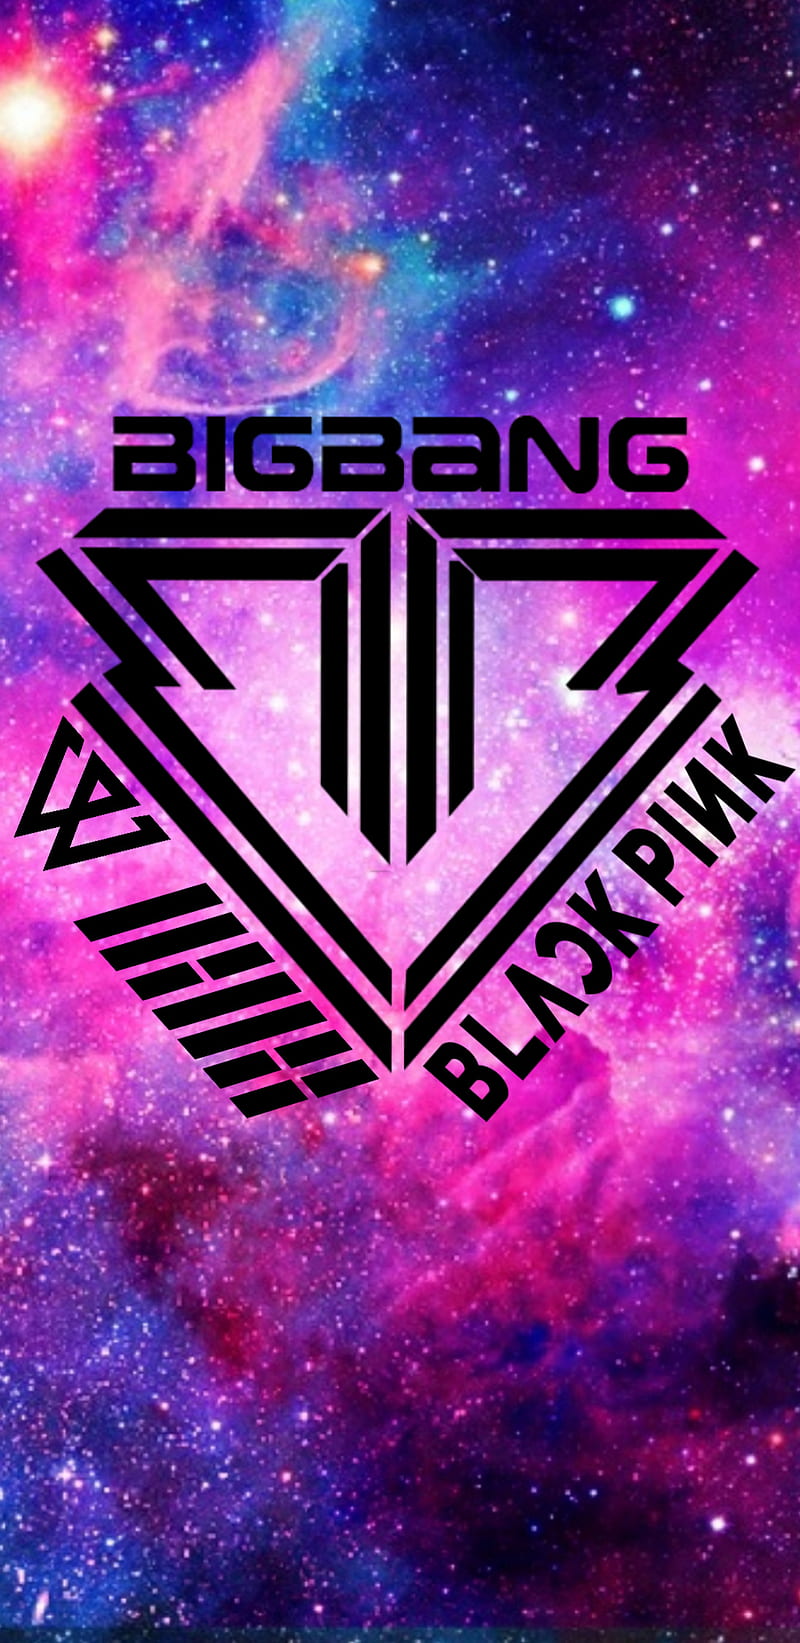 BigBang iKon YG, blackpink, blink, ikonic, innercircle, jennie, jisoo, lisa, rose, vip, winner, HD phone wallpaper